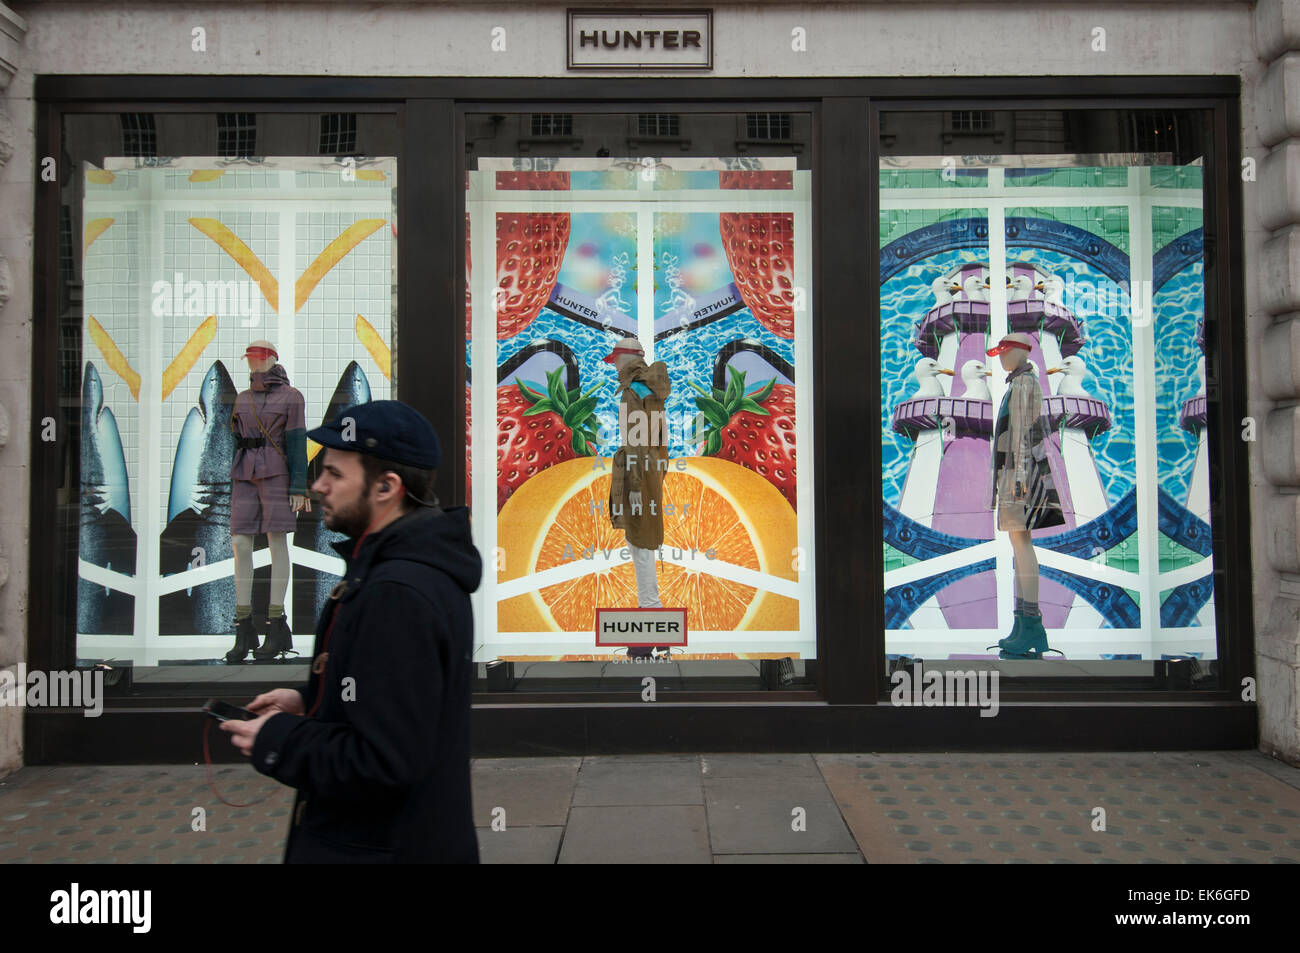 Hunter shop window display in Regent Street, London Stock Photo - Alamy